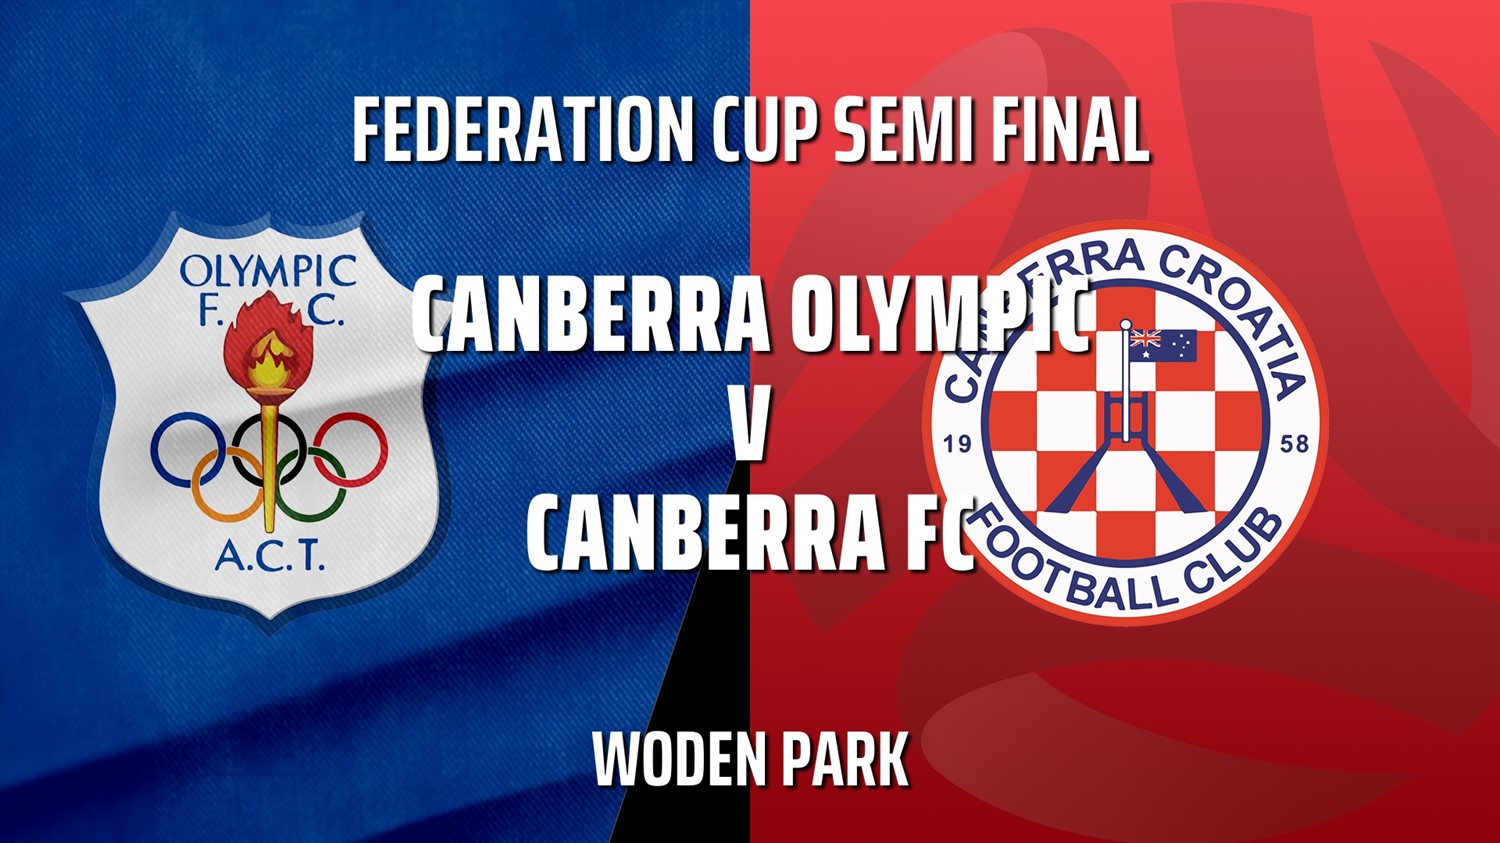 220512-Federation Cup Semi Final - Canberra Olympic FC (women) v Canberra FC (women) Slate Image